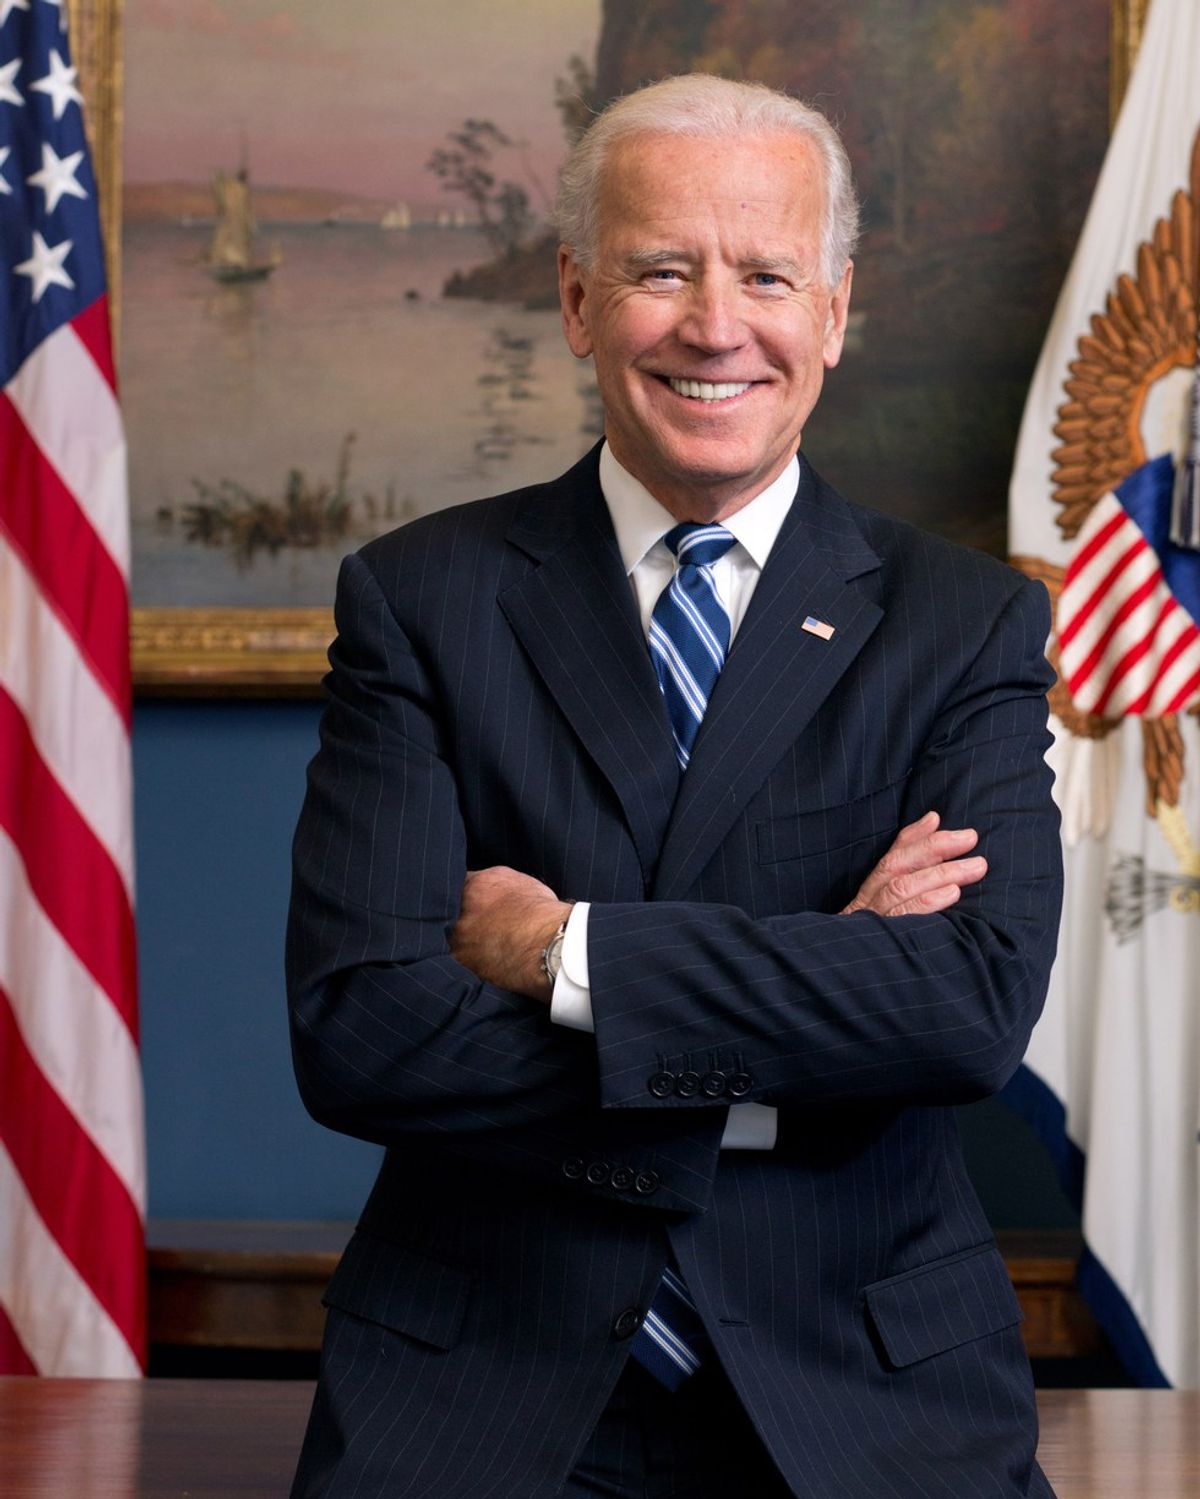 10 Joe Biden Memes To Make Your Day Better